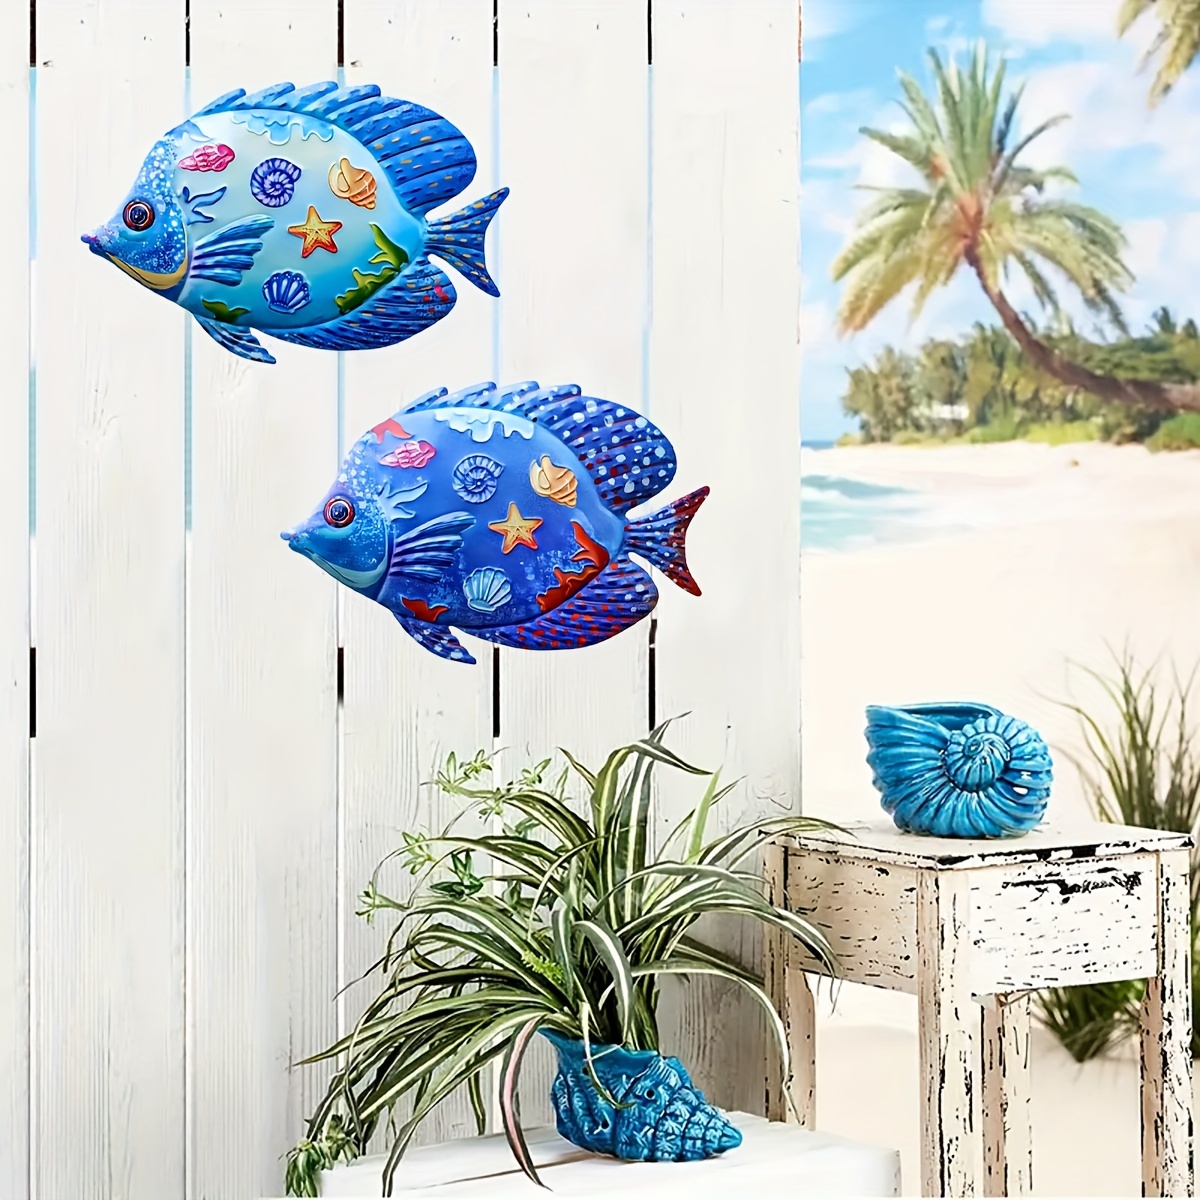 Coastal Ocean Sea Metal Fish Wall Art Decor Set of 2 for Indoor /Outdoor Hanging - Sculptures for Home, Bathroom, Garden, Patio, Pool Fence, Size: 10*